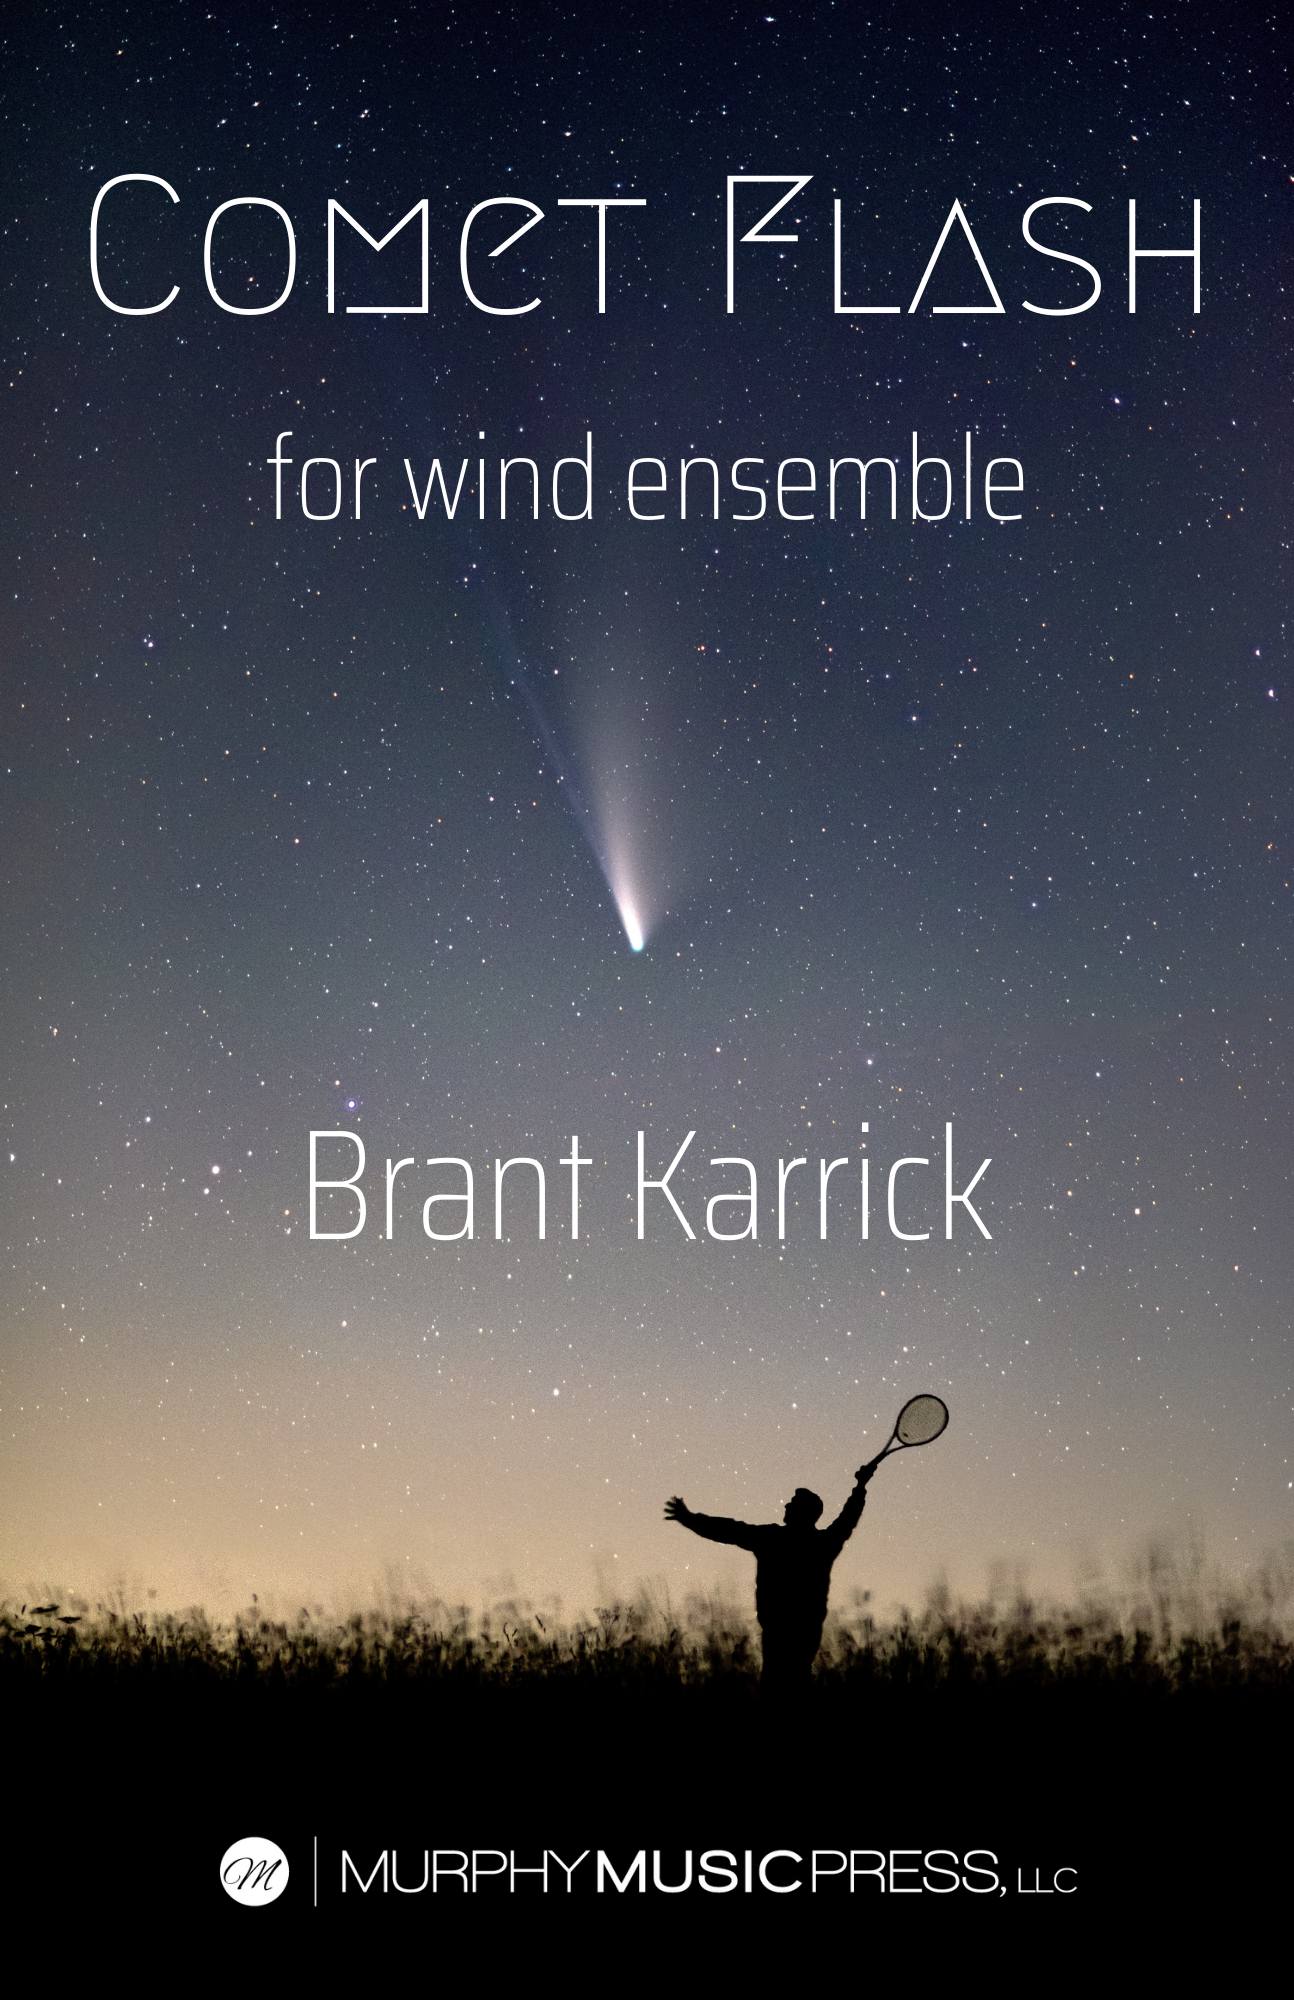 Comet Flash by Brank Karrick